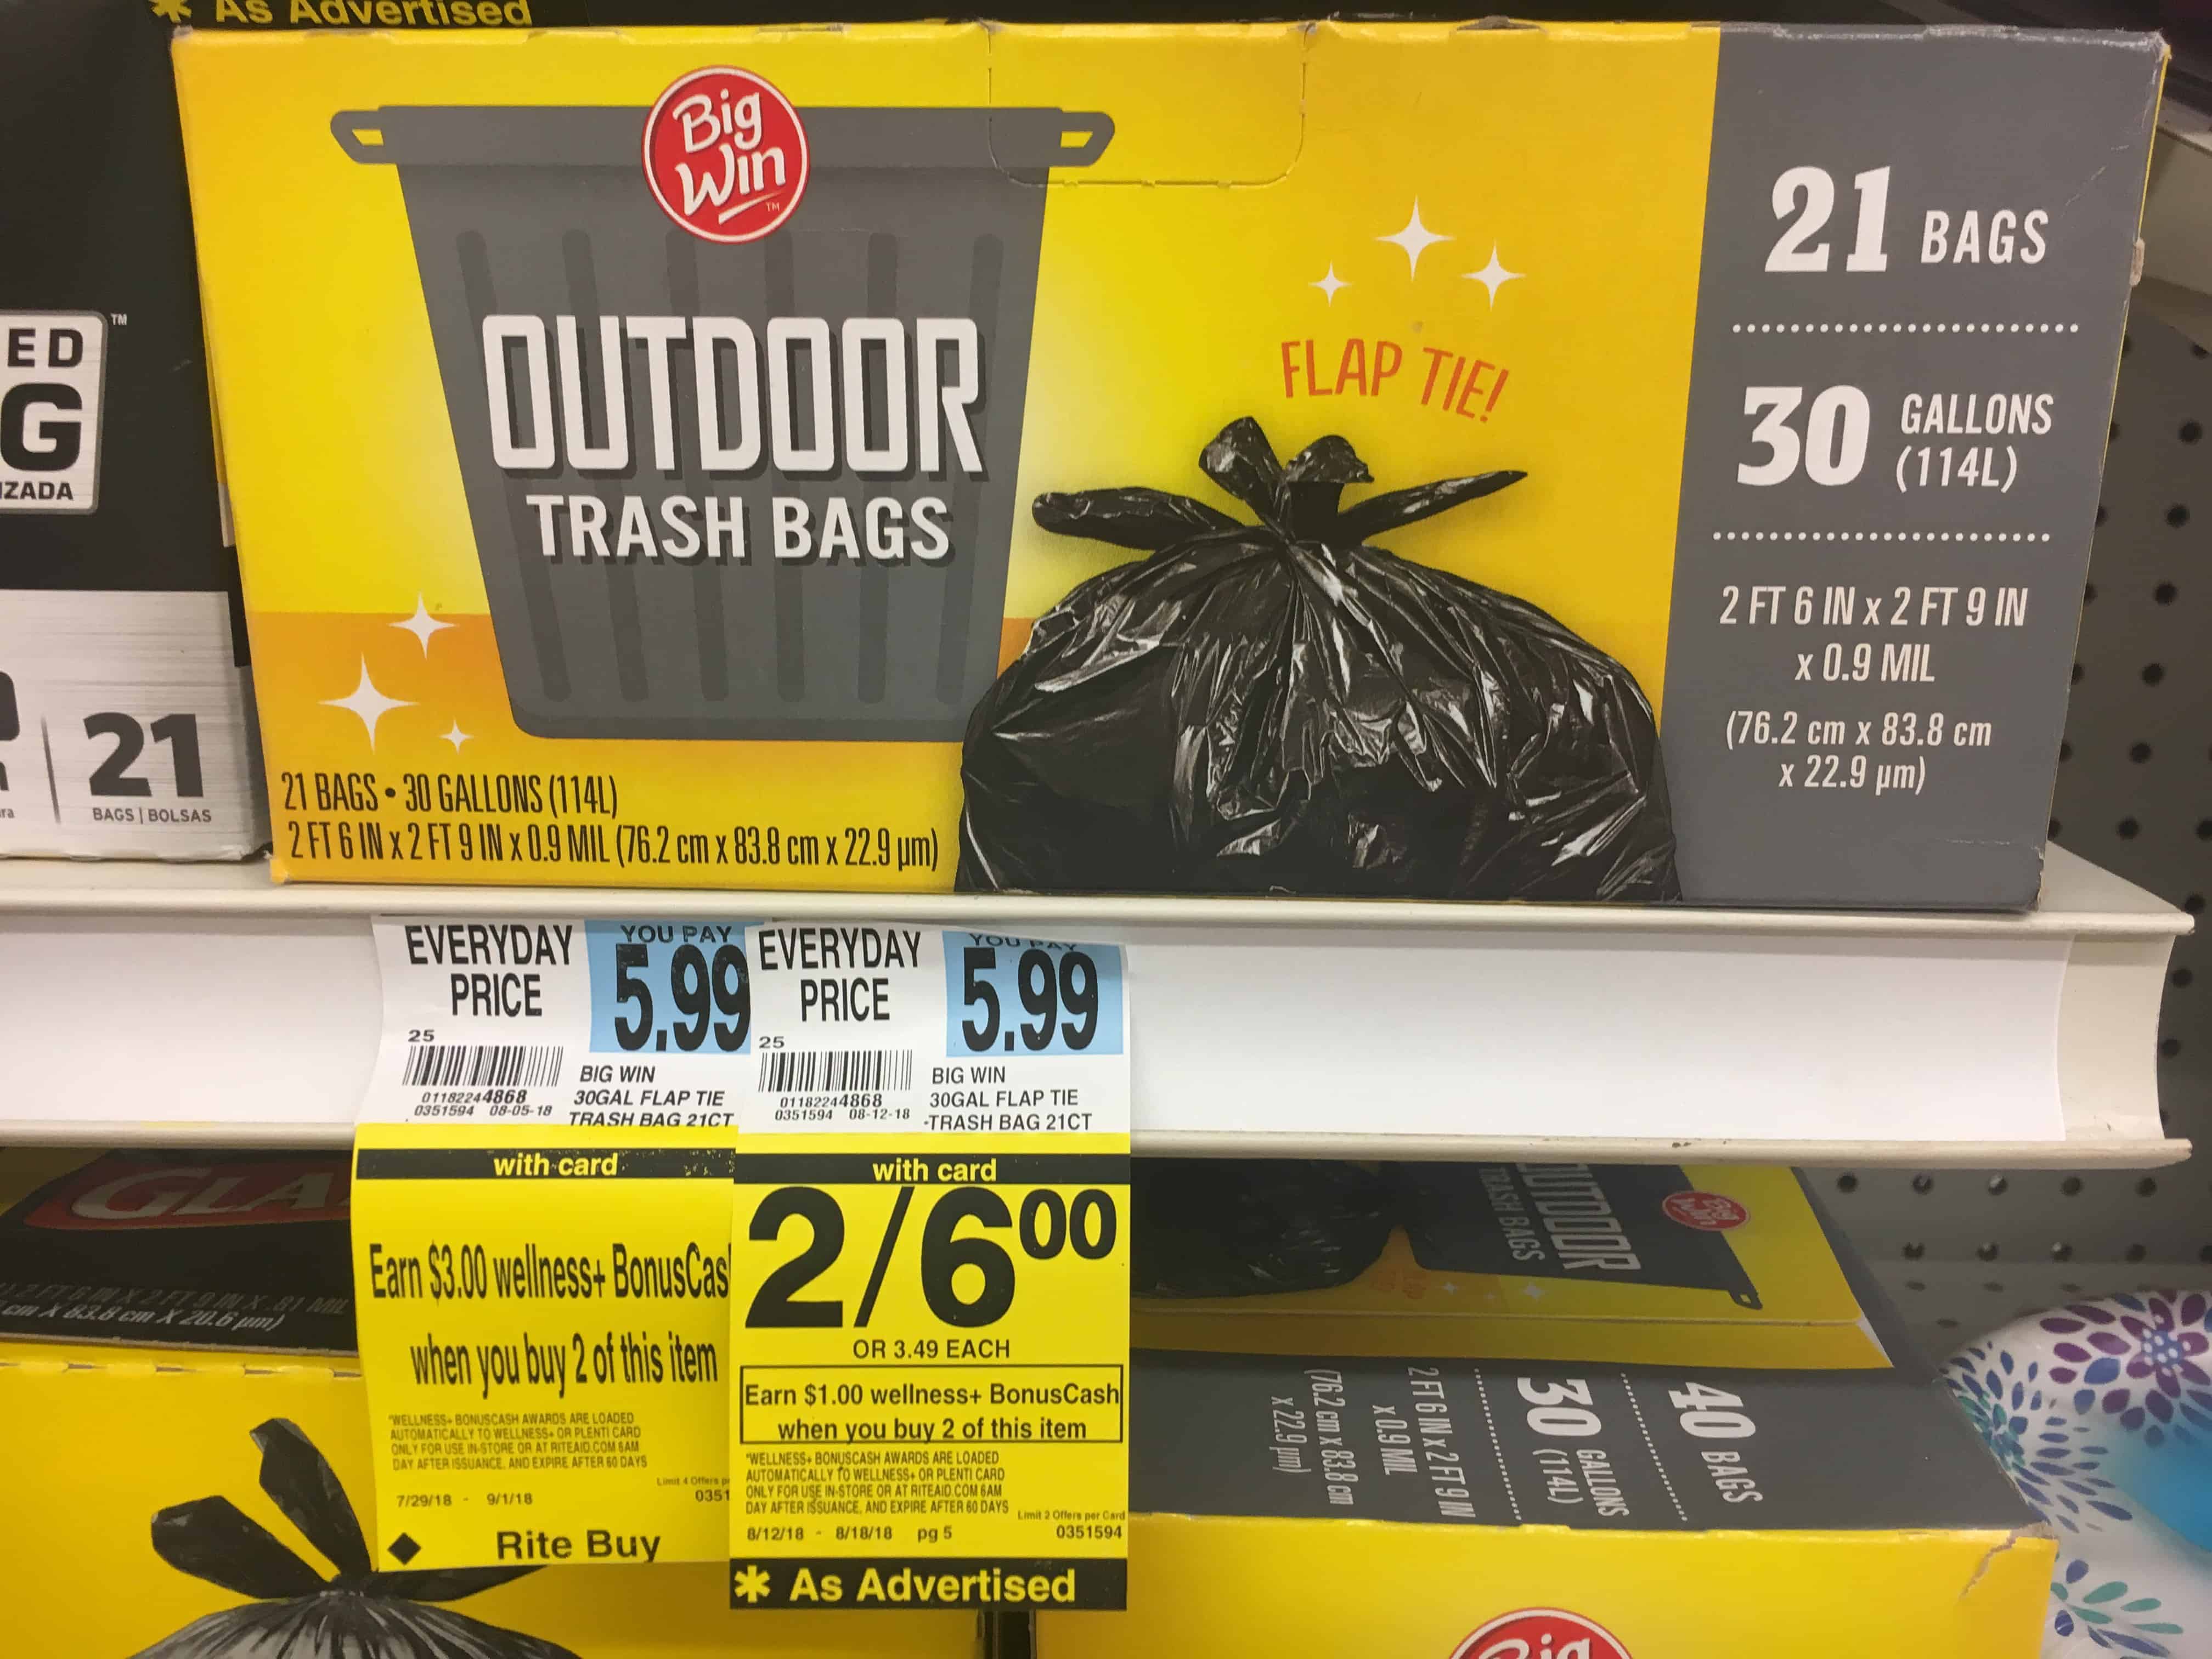 Rite Aid: Big Win Outdoor Trash Bags ONLY $1 each through 8/18